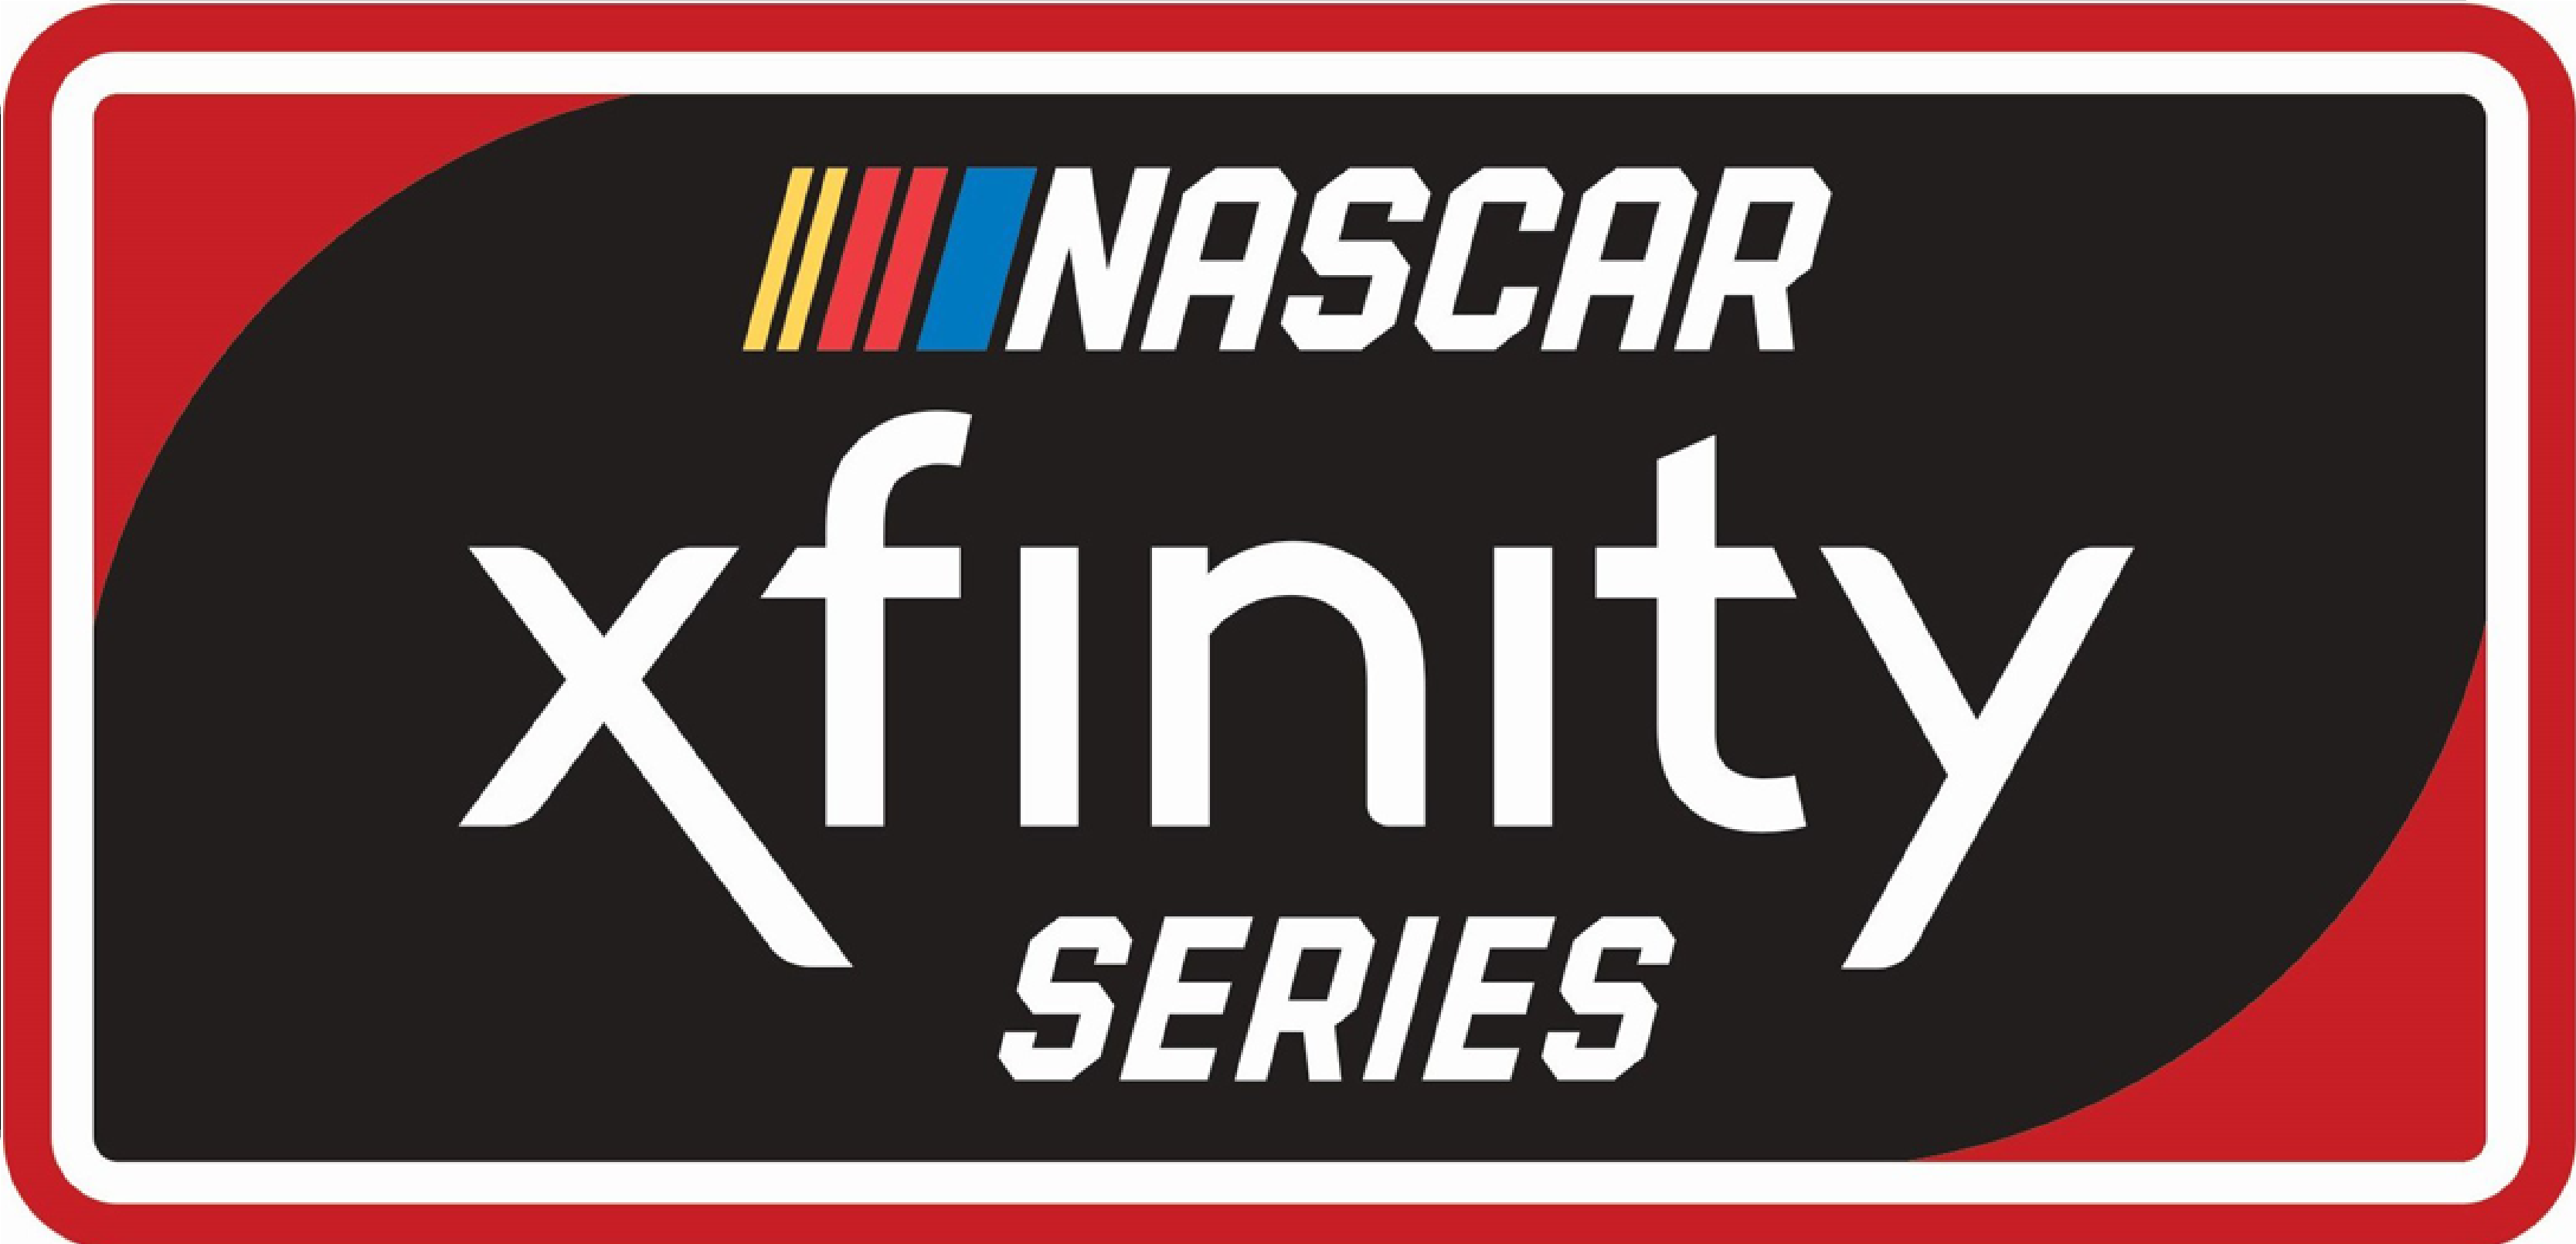 NASCAR Xfinity Series - Календарь 2021